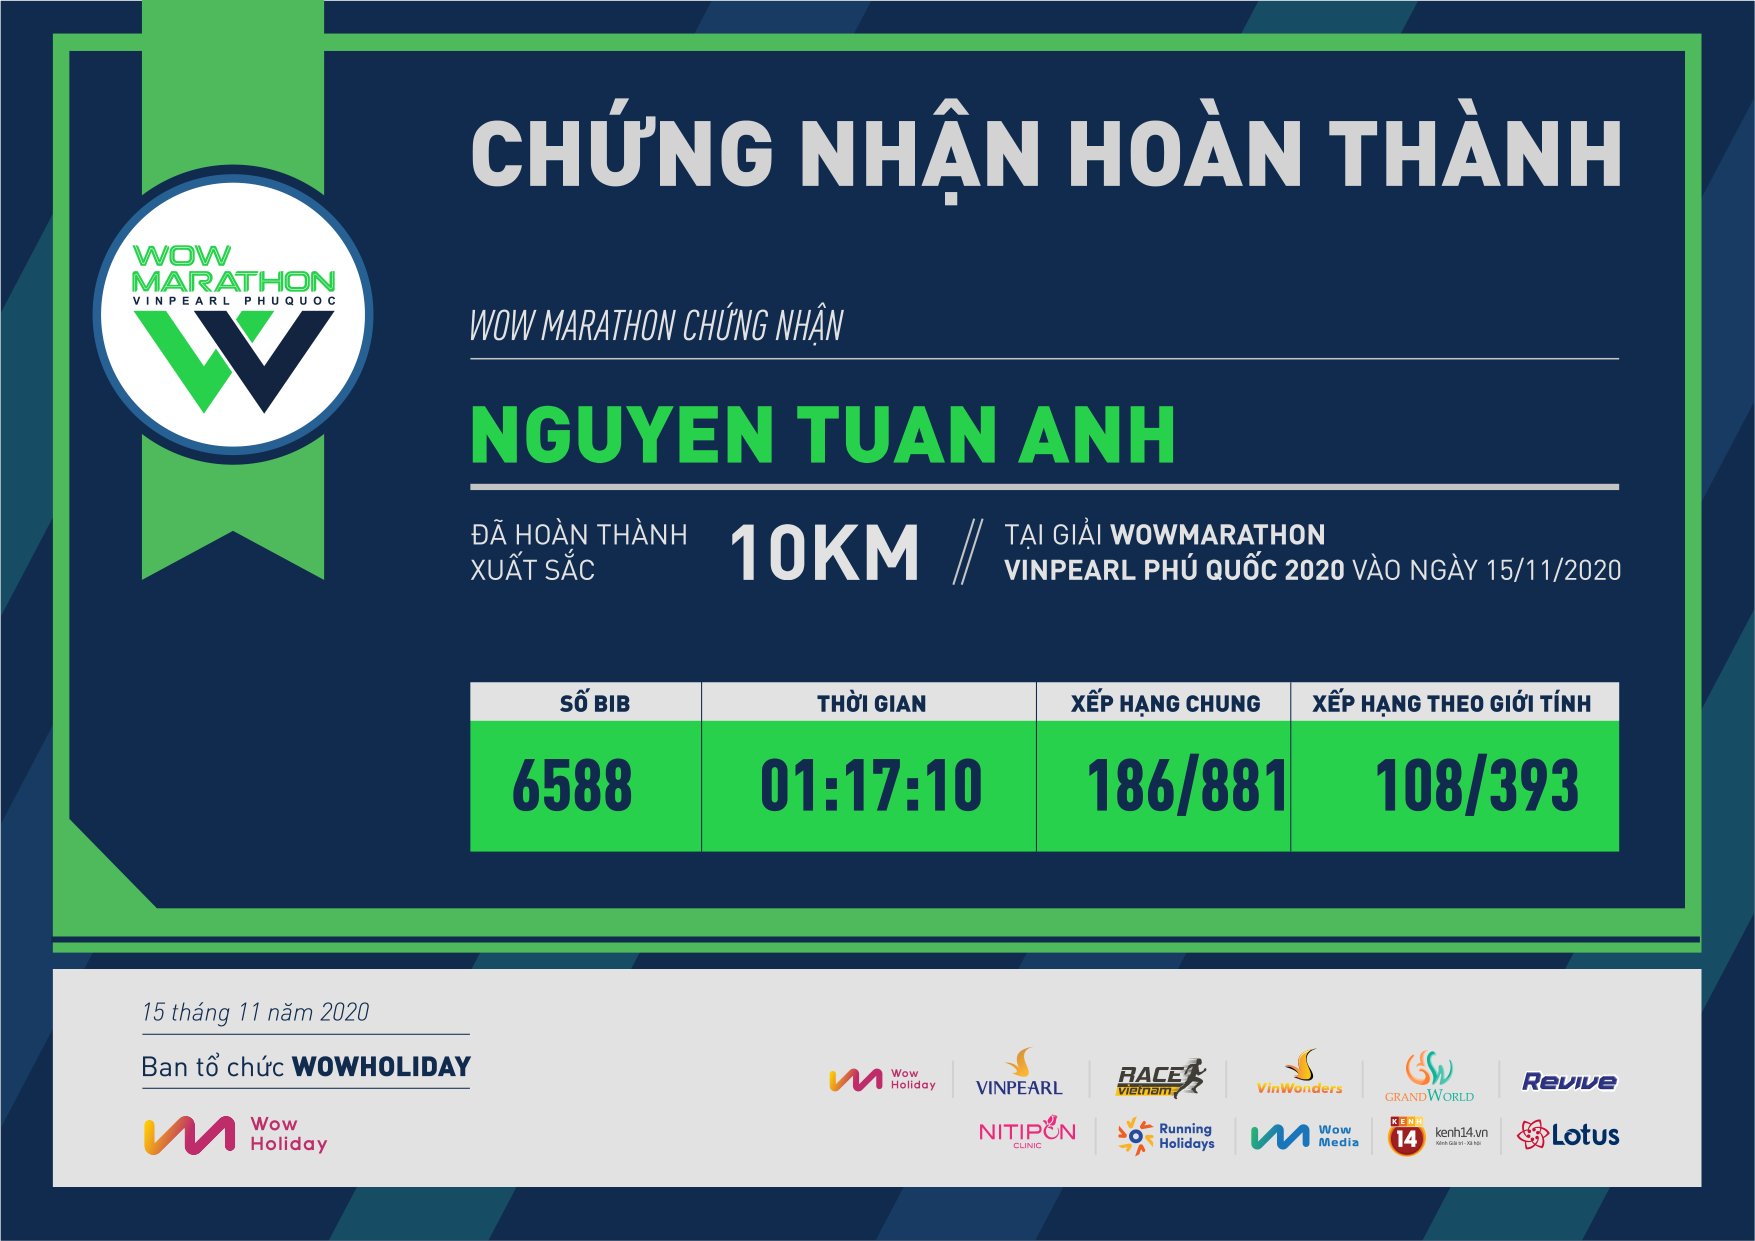 6588 - Nguyen Tuan Anh